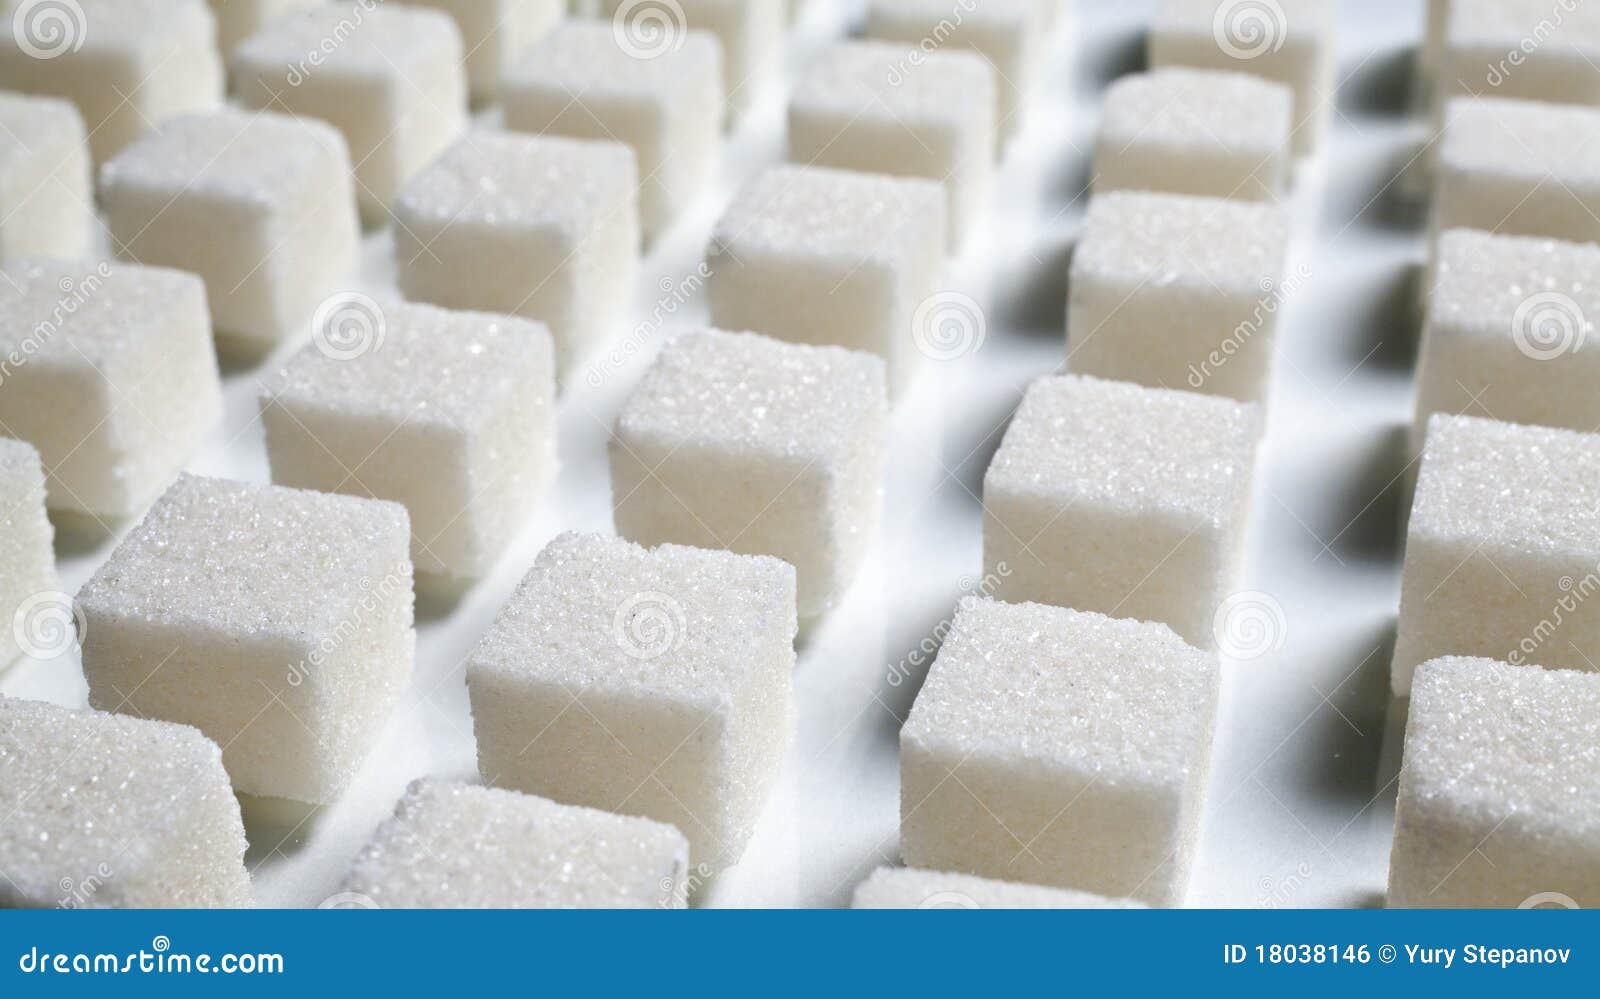 Pile of sugar cubes stock photo. Image of brick, diffuse - 18038146